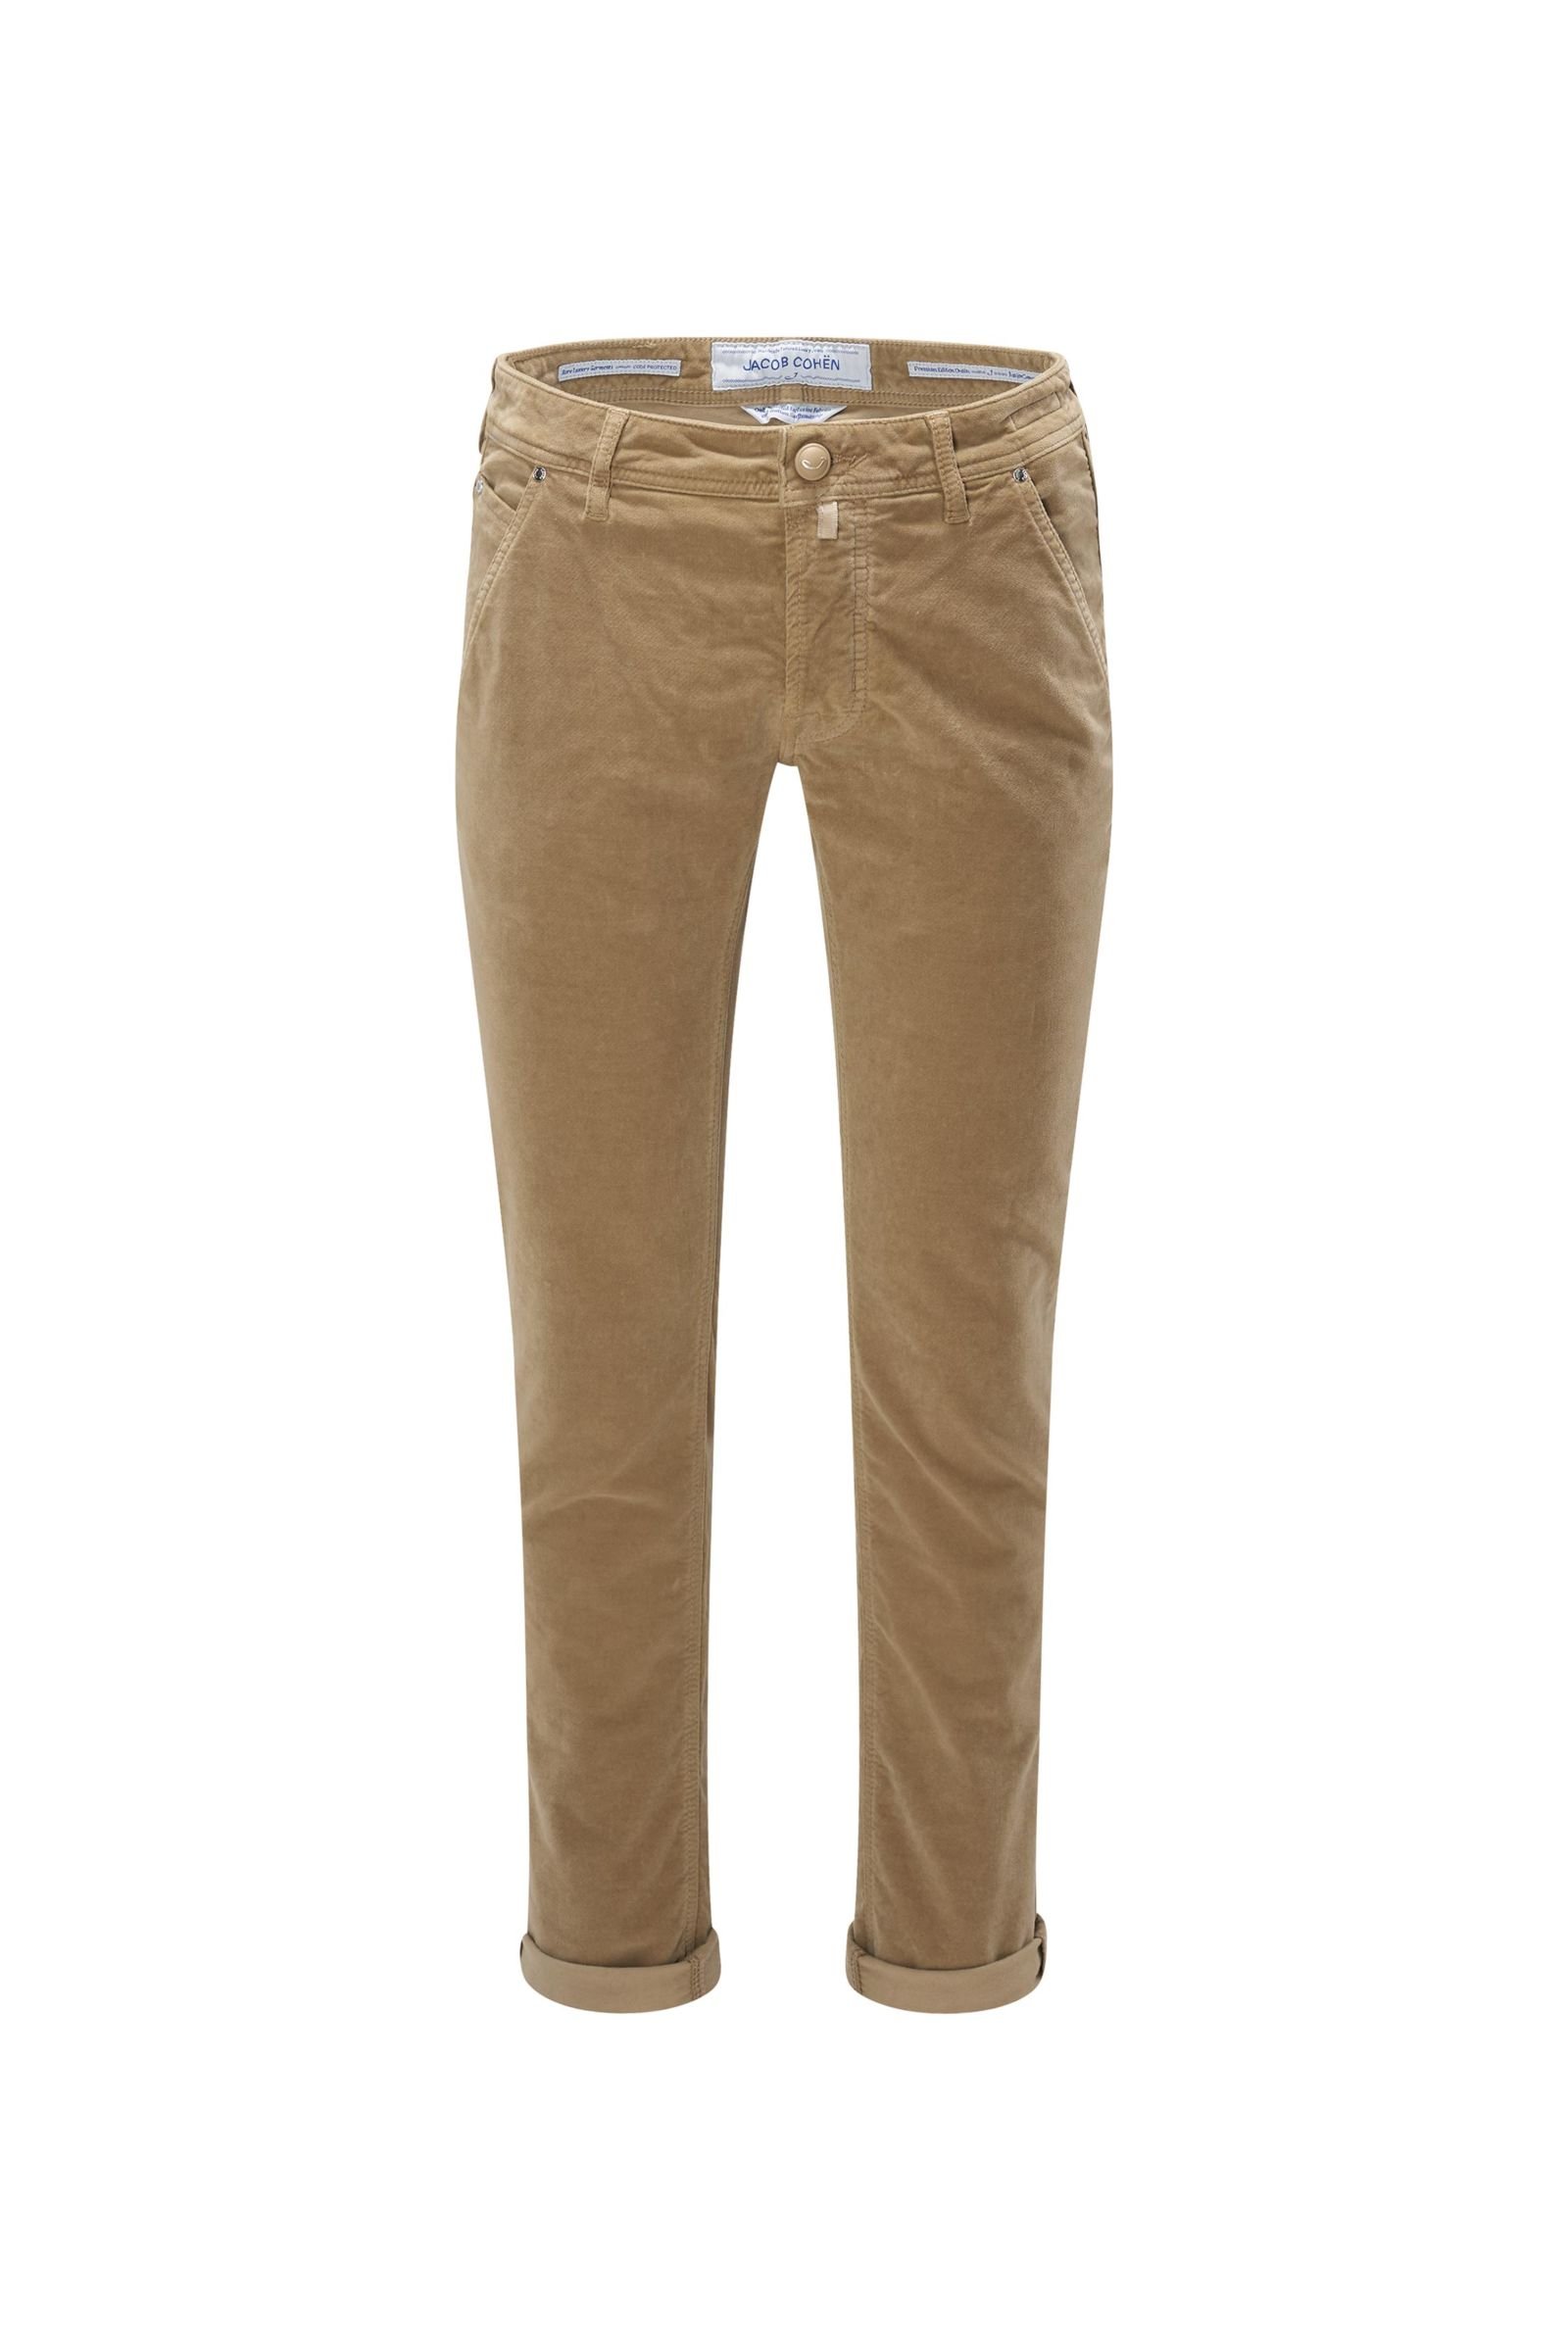 Fustian trousers 'J613 Comfort Slim Fit' light brown